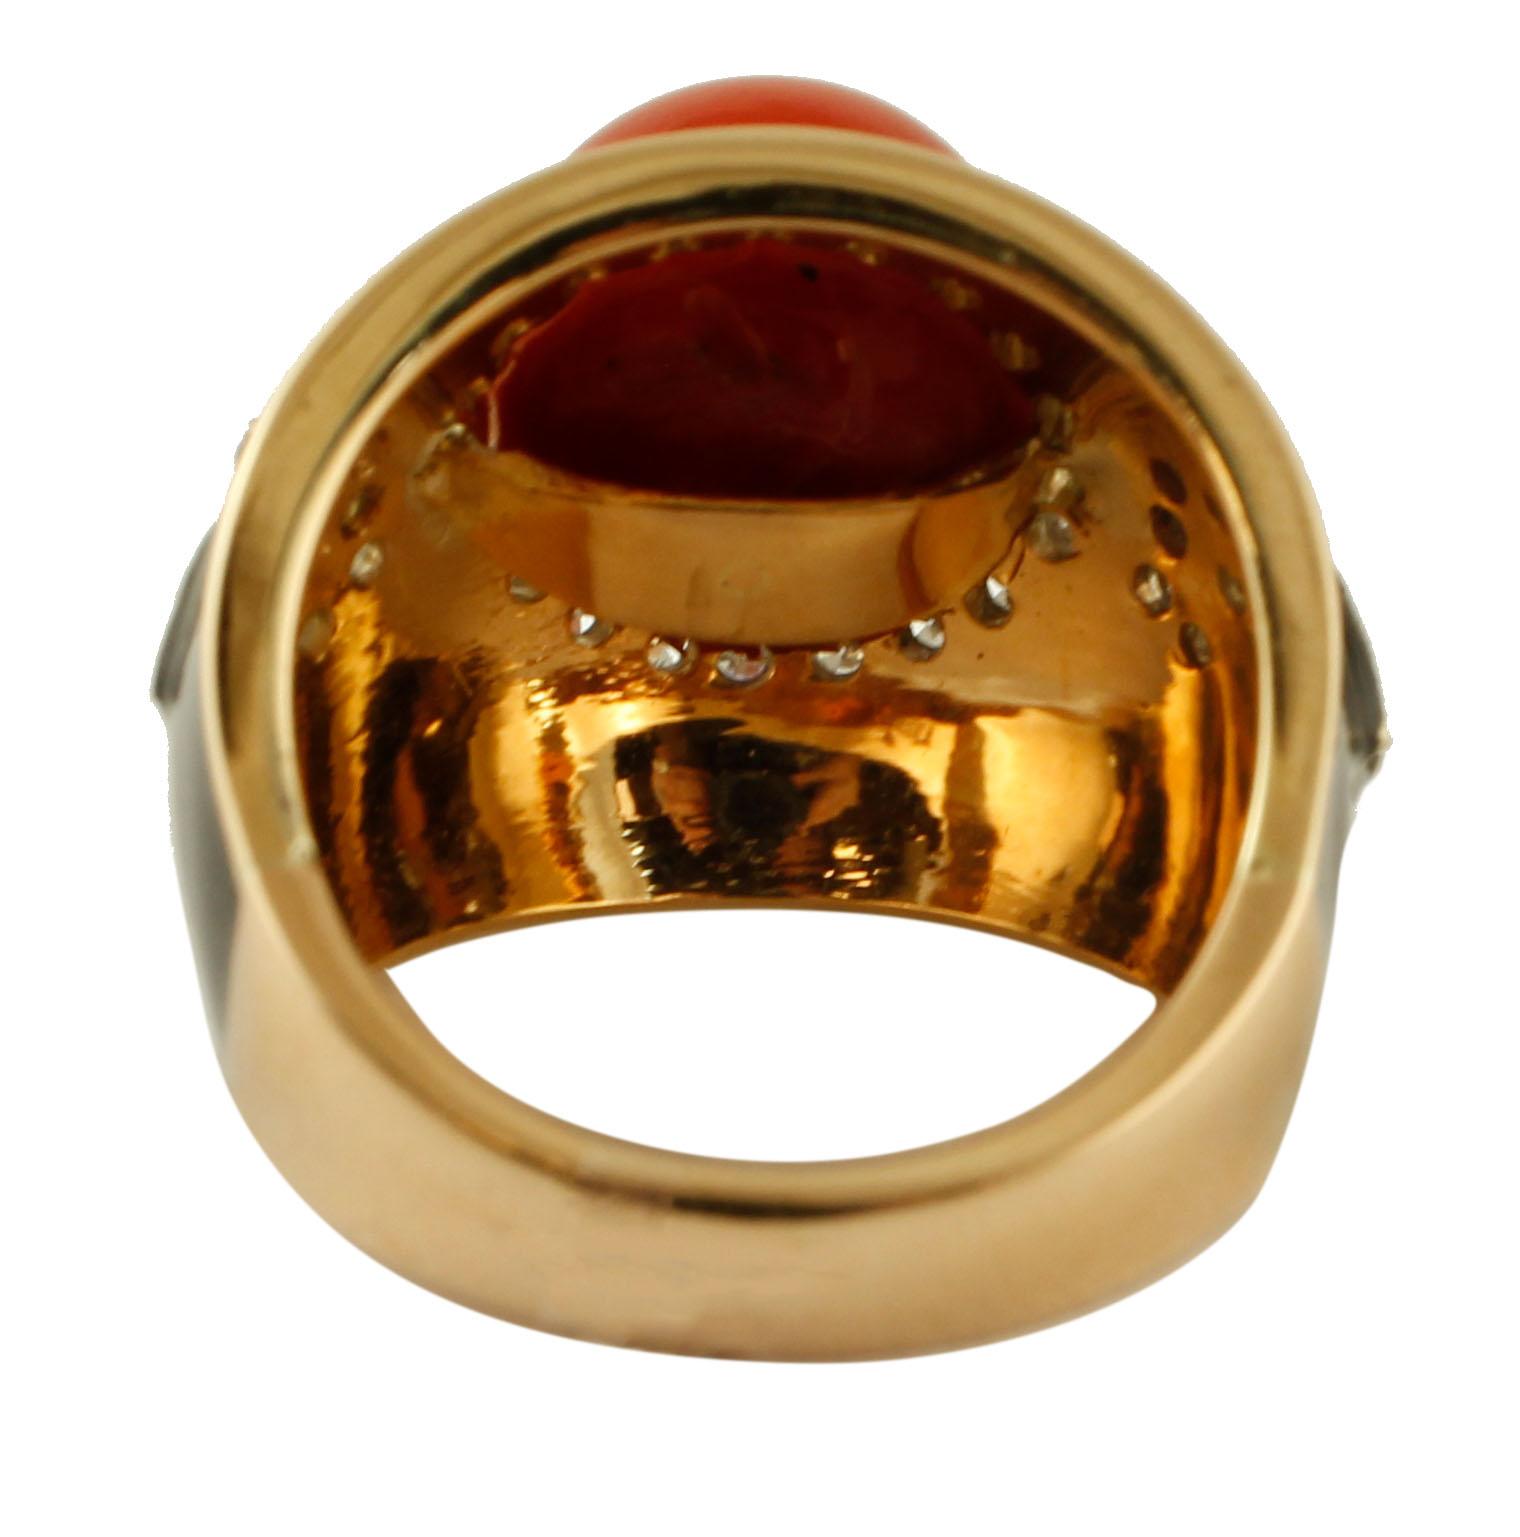 Mixed Cut Diamonds, Red Rubrum Coral, Enamel, 14 Karat Yellow and White Gold, Vintage Ring